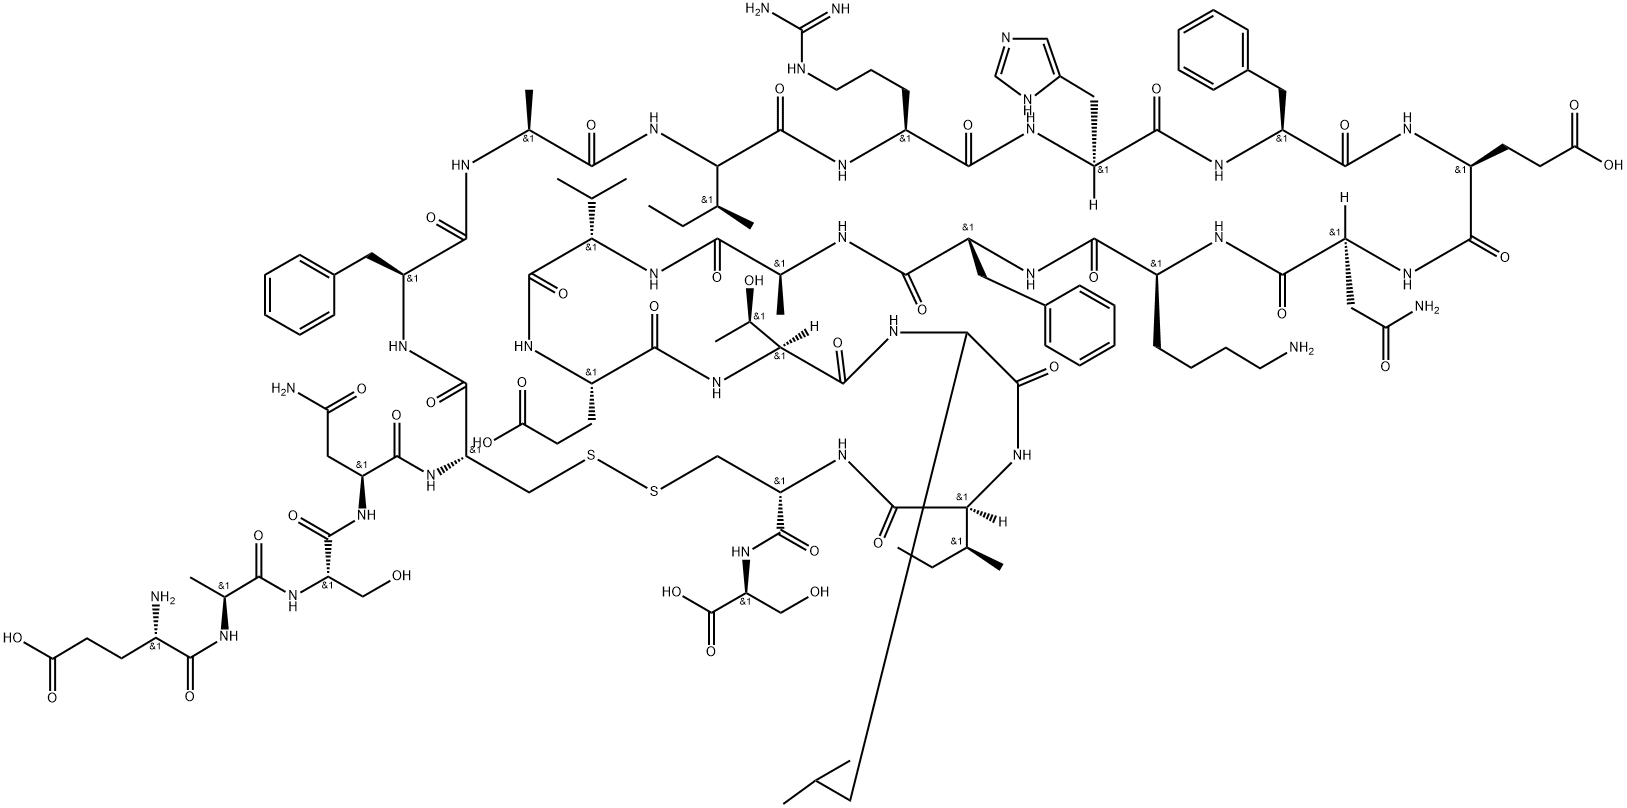 Amyloid Bri Protein (1-23) trifluoroacetate salt H-Glu-Ala-Ser-Asn-Cys-Phe-Ala-Ile-Arg-His-Phe-Glu-Asn-Lys-Phe-Ala-Val-Glu-Thr-Leu-Ile-Cys-Ser-OH trifluoroacetate salt (Disulfide bond) Structure